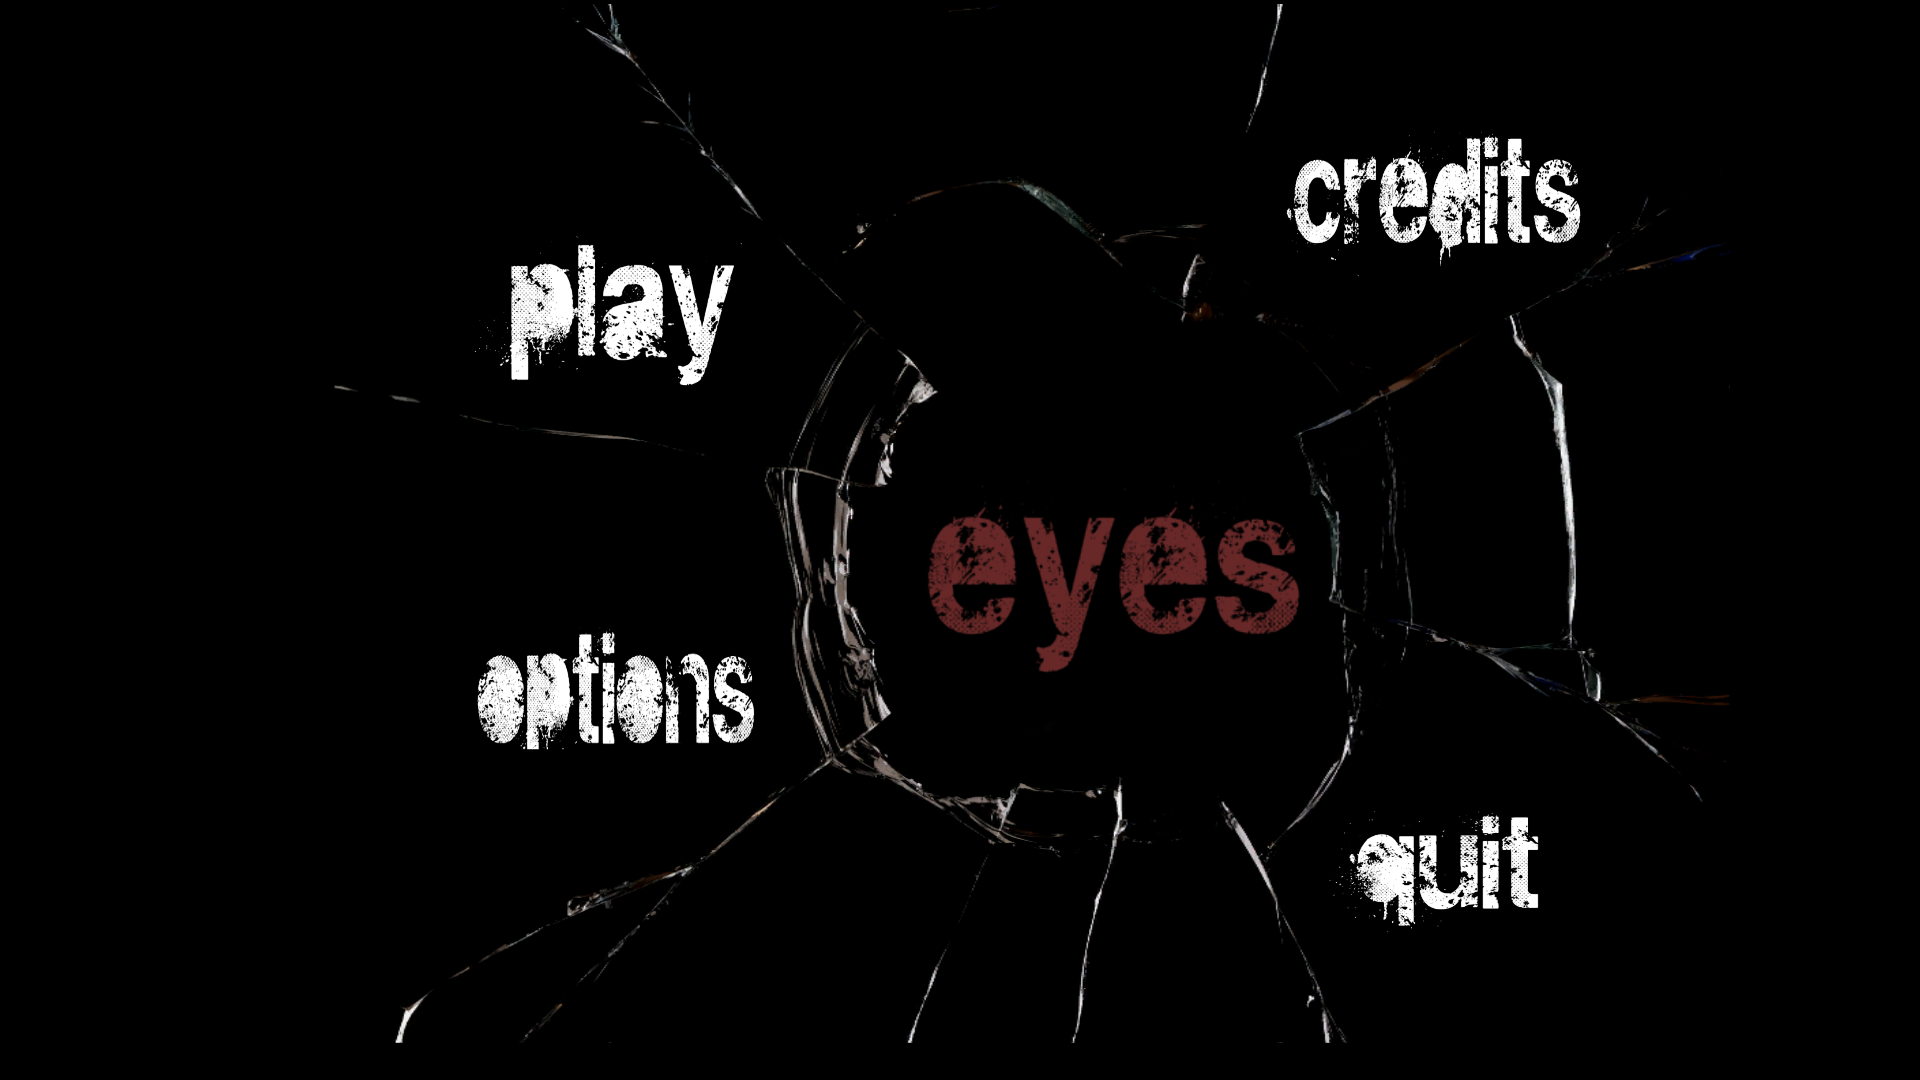 Eyes the horror game андроид